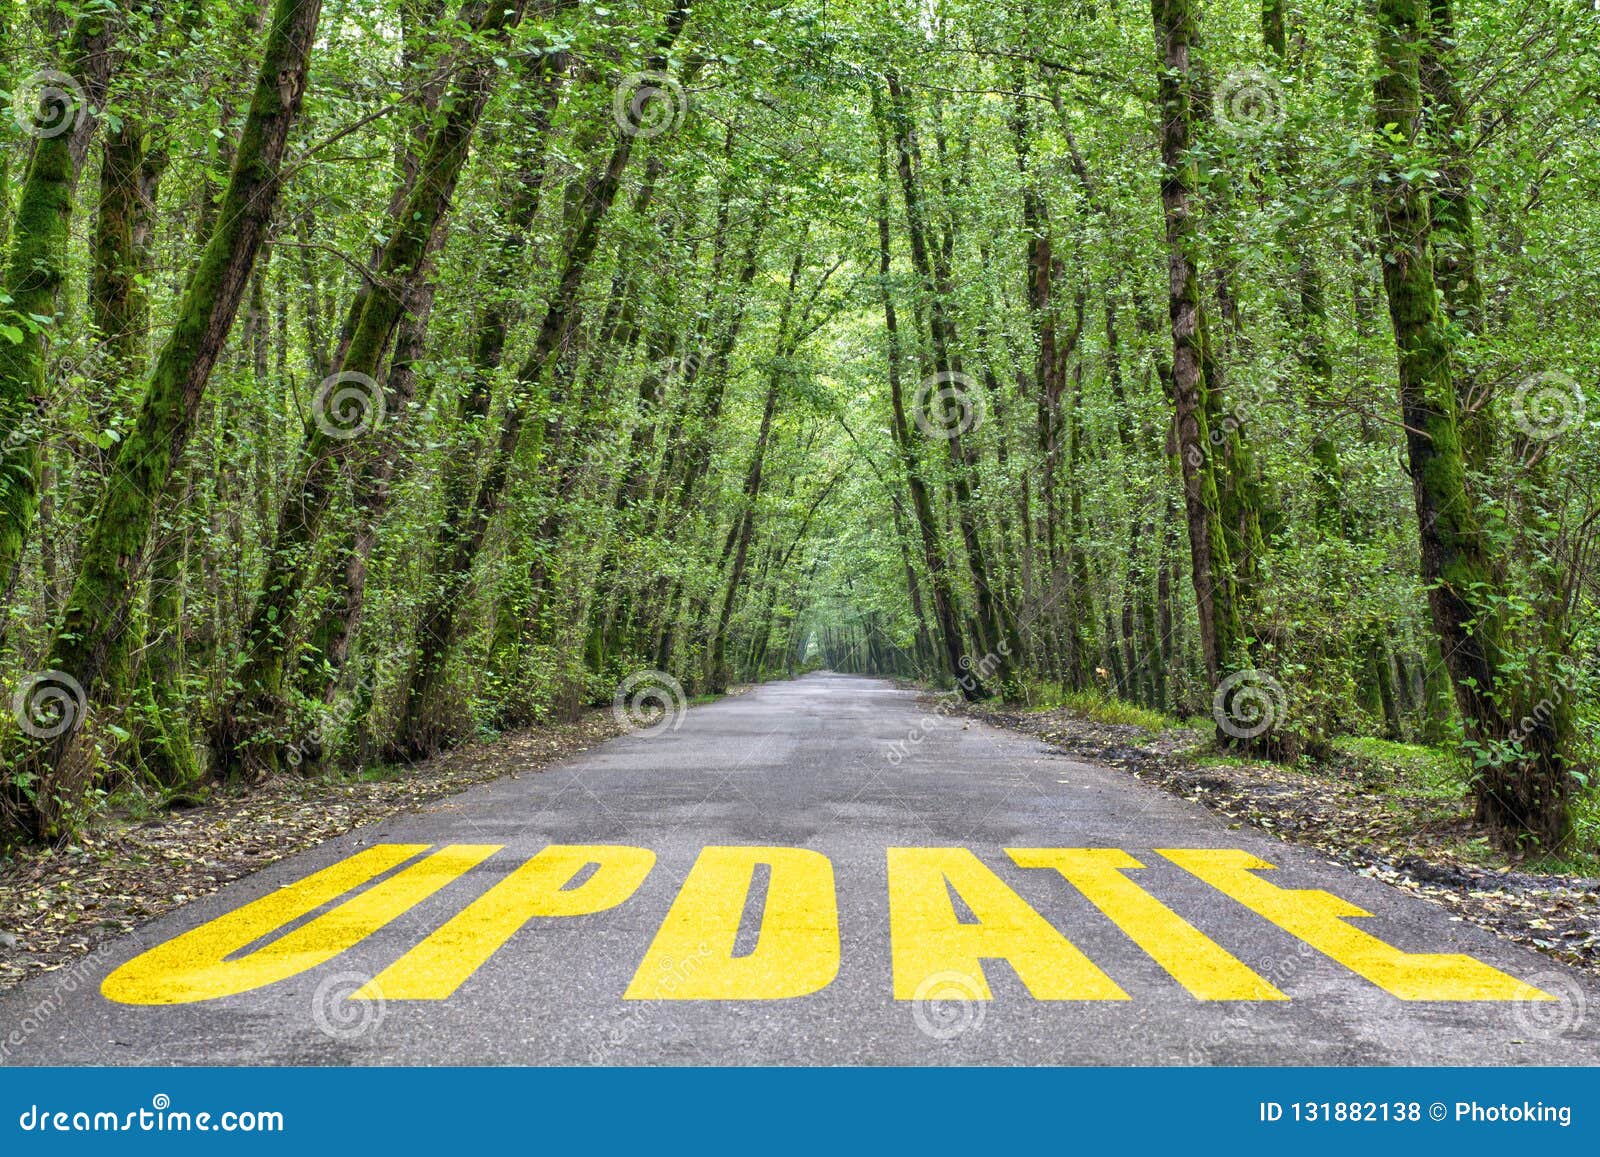 jungle road to update